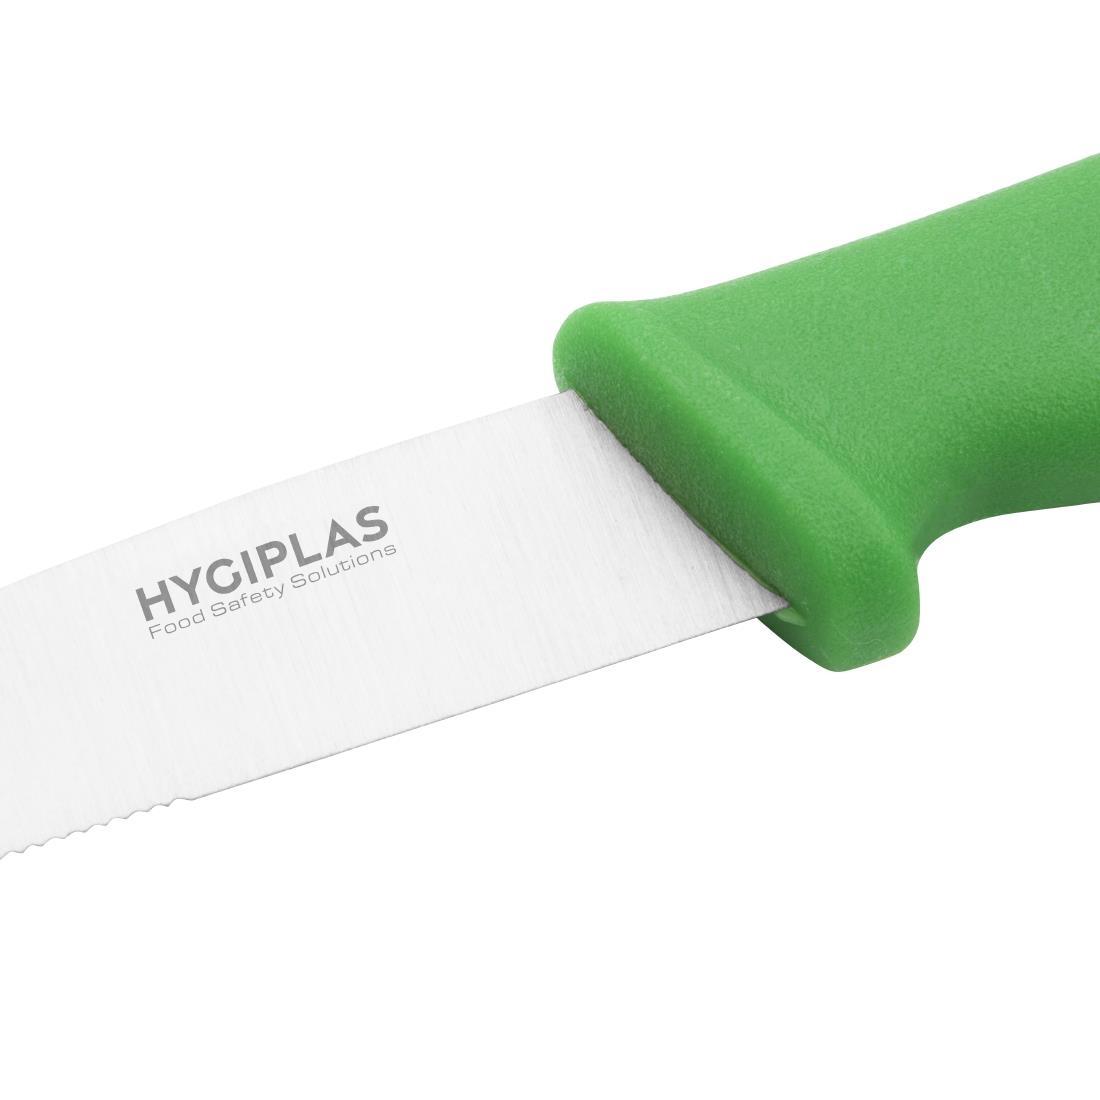 Hygiplas Serrated Vegetable Knife Green 10cm - C862  - 3